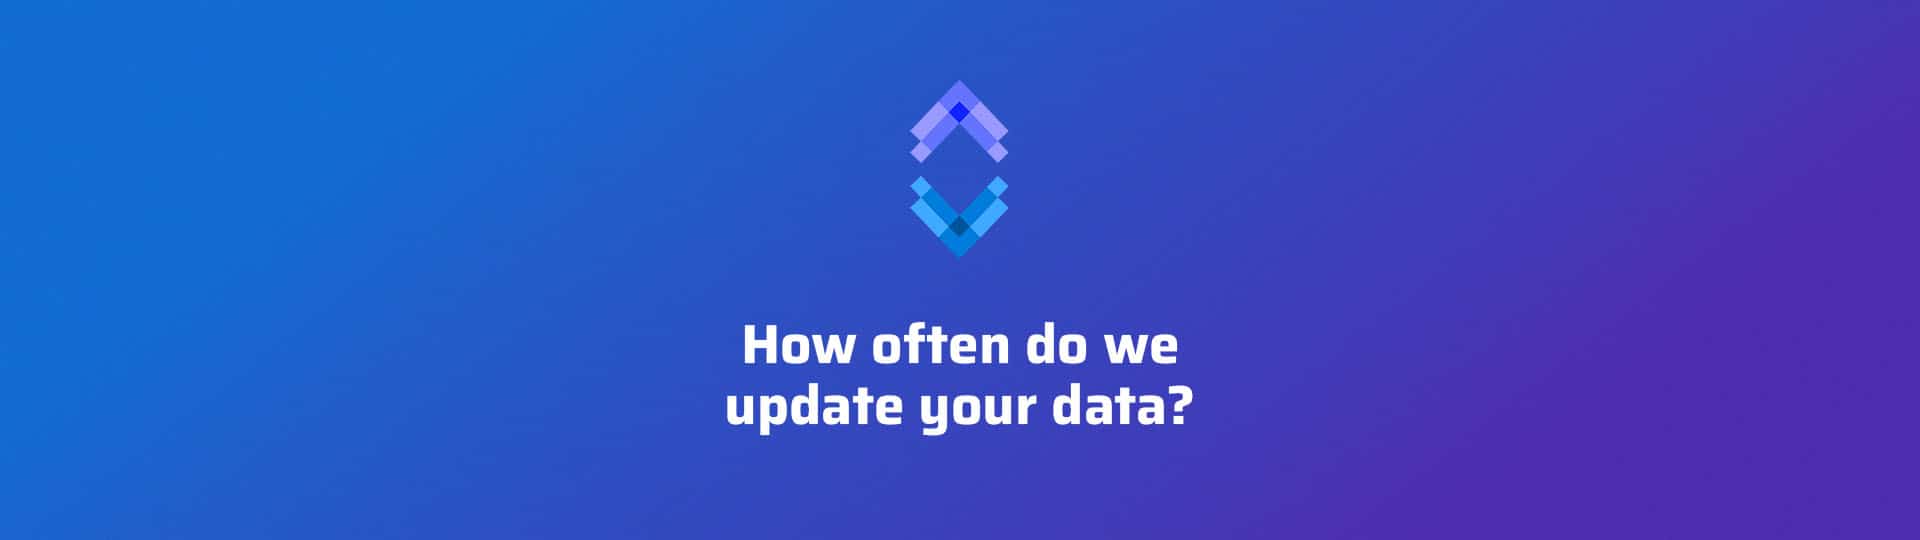 How often do we update your data_